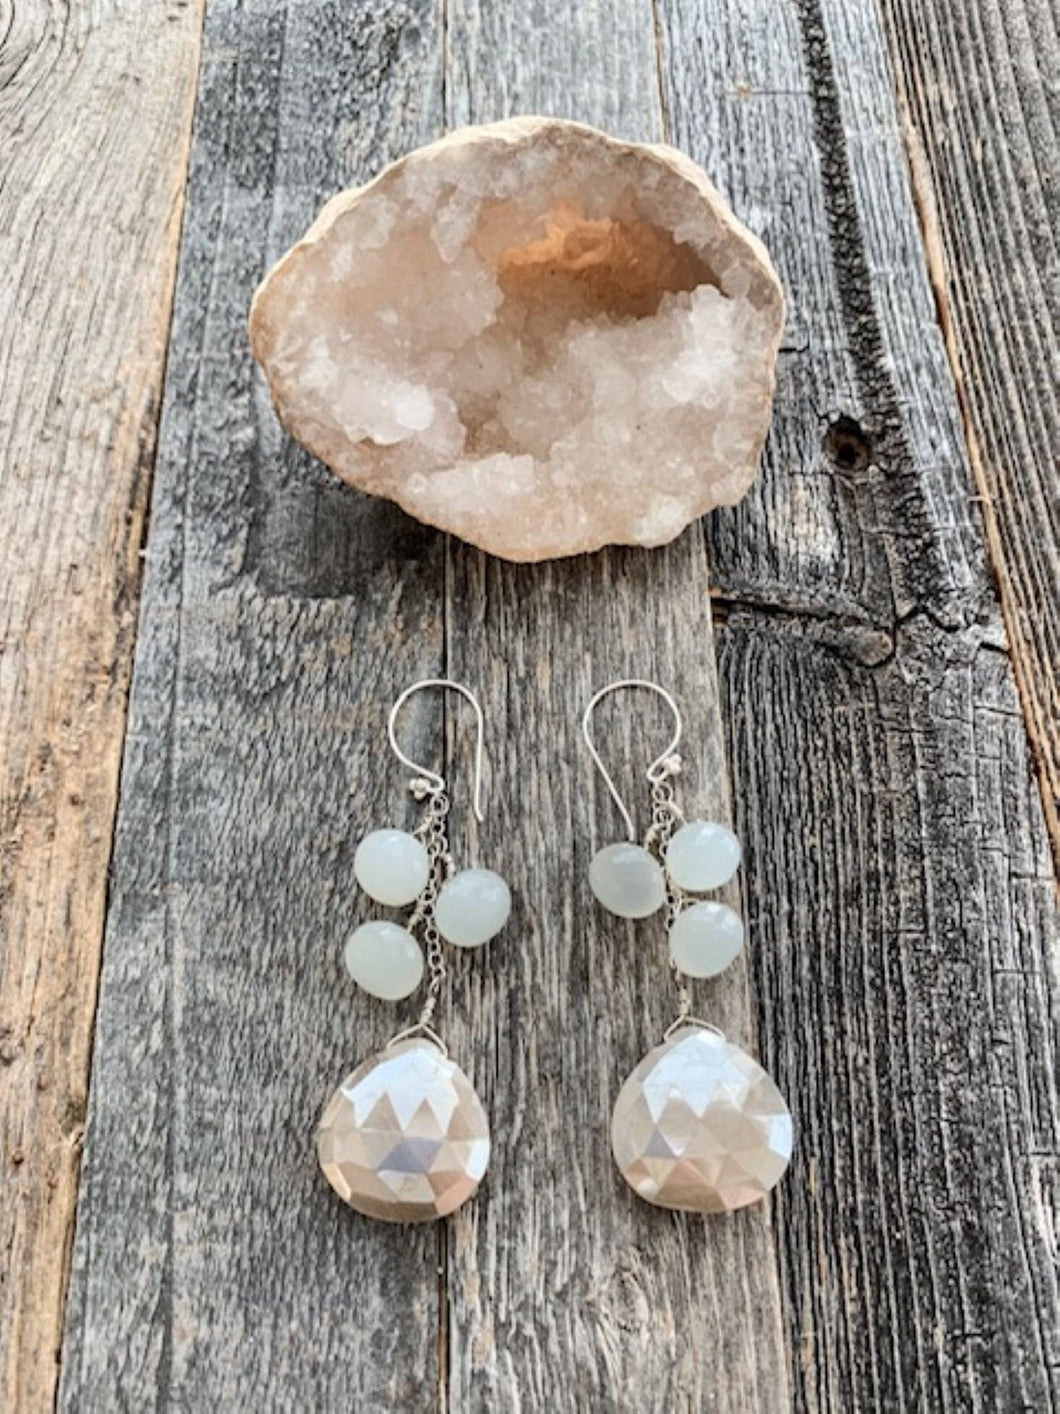 Mystic Moonstone Earrings | Sterling Silver Earrings | Gemstone Earrings | Dangle Earrings | Bohemian